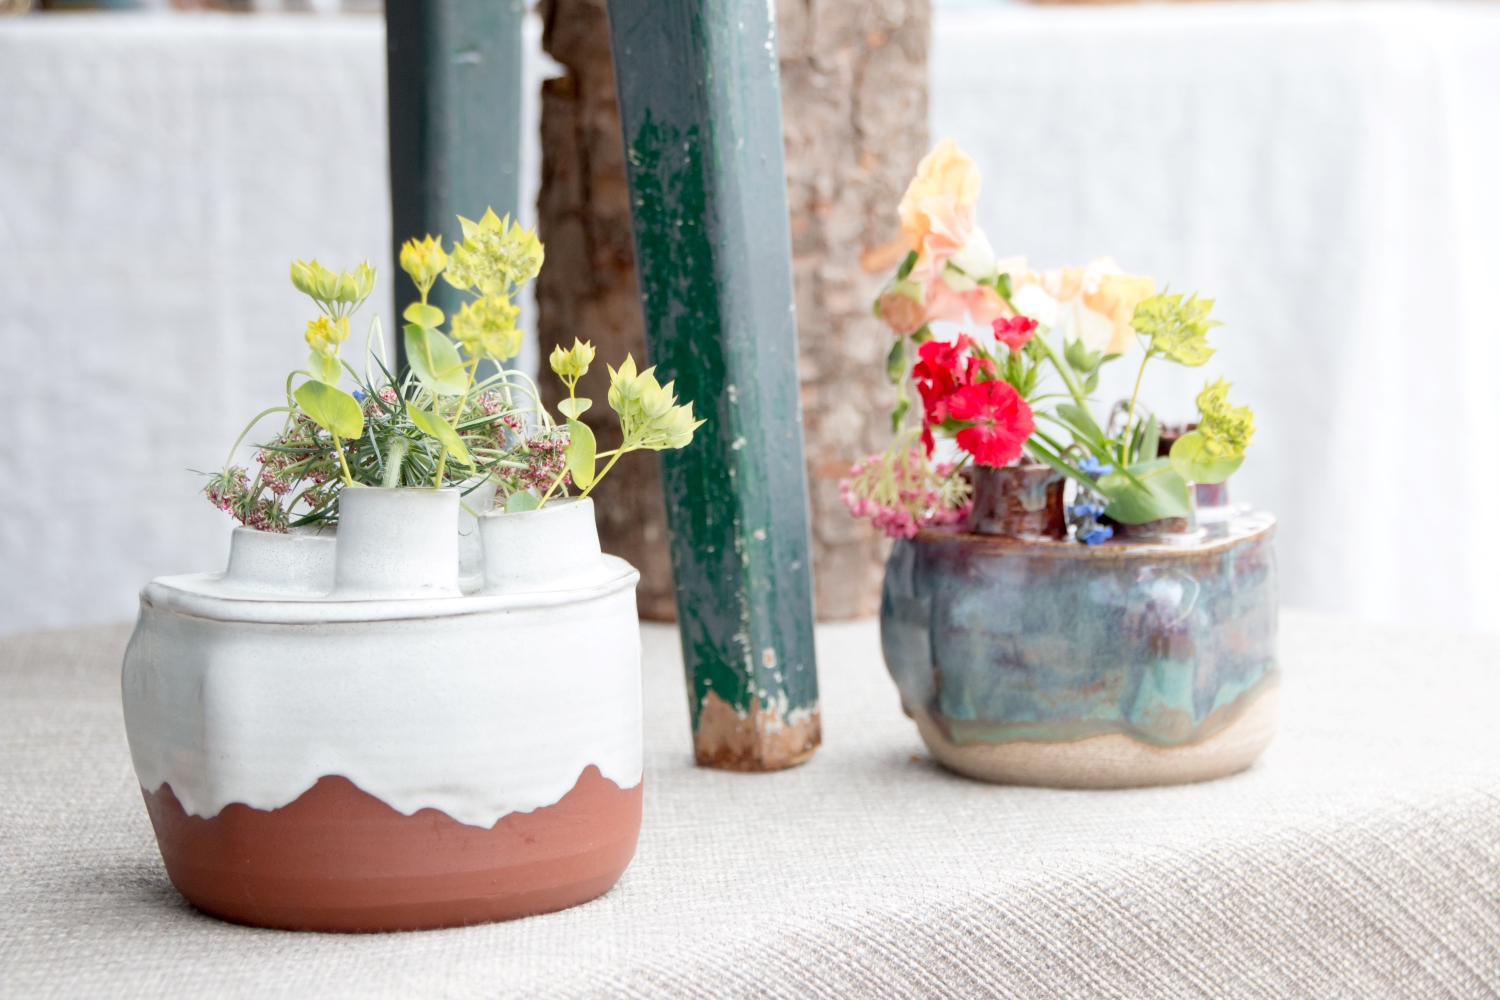 Ceramics with flowers